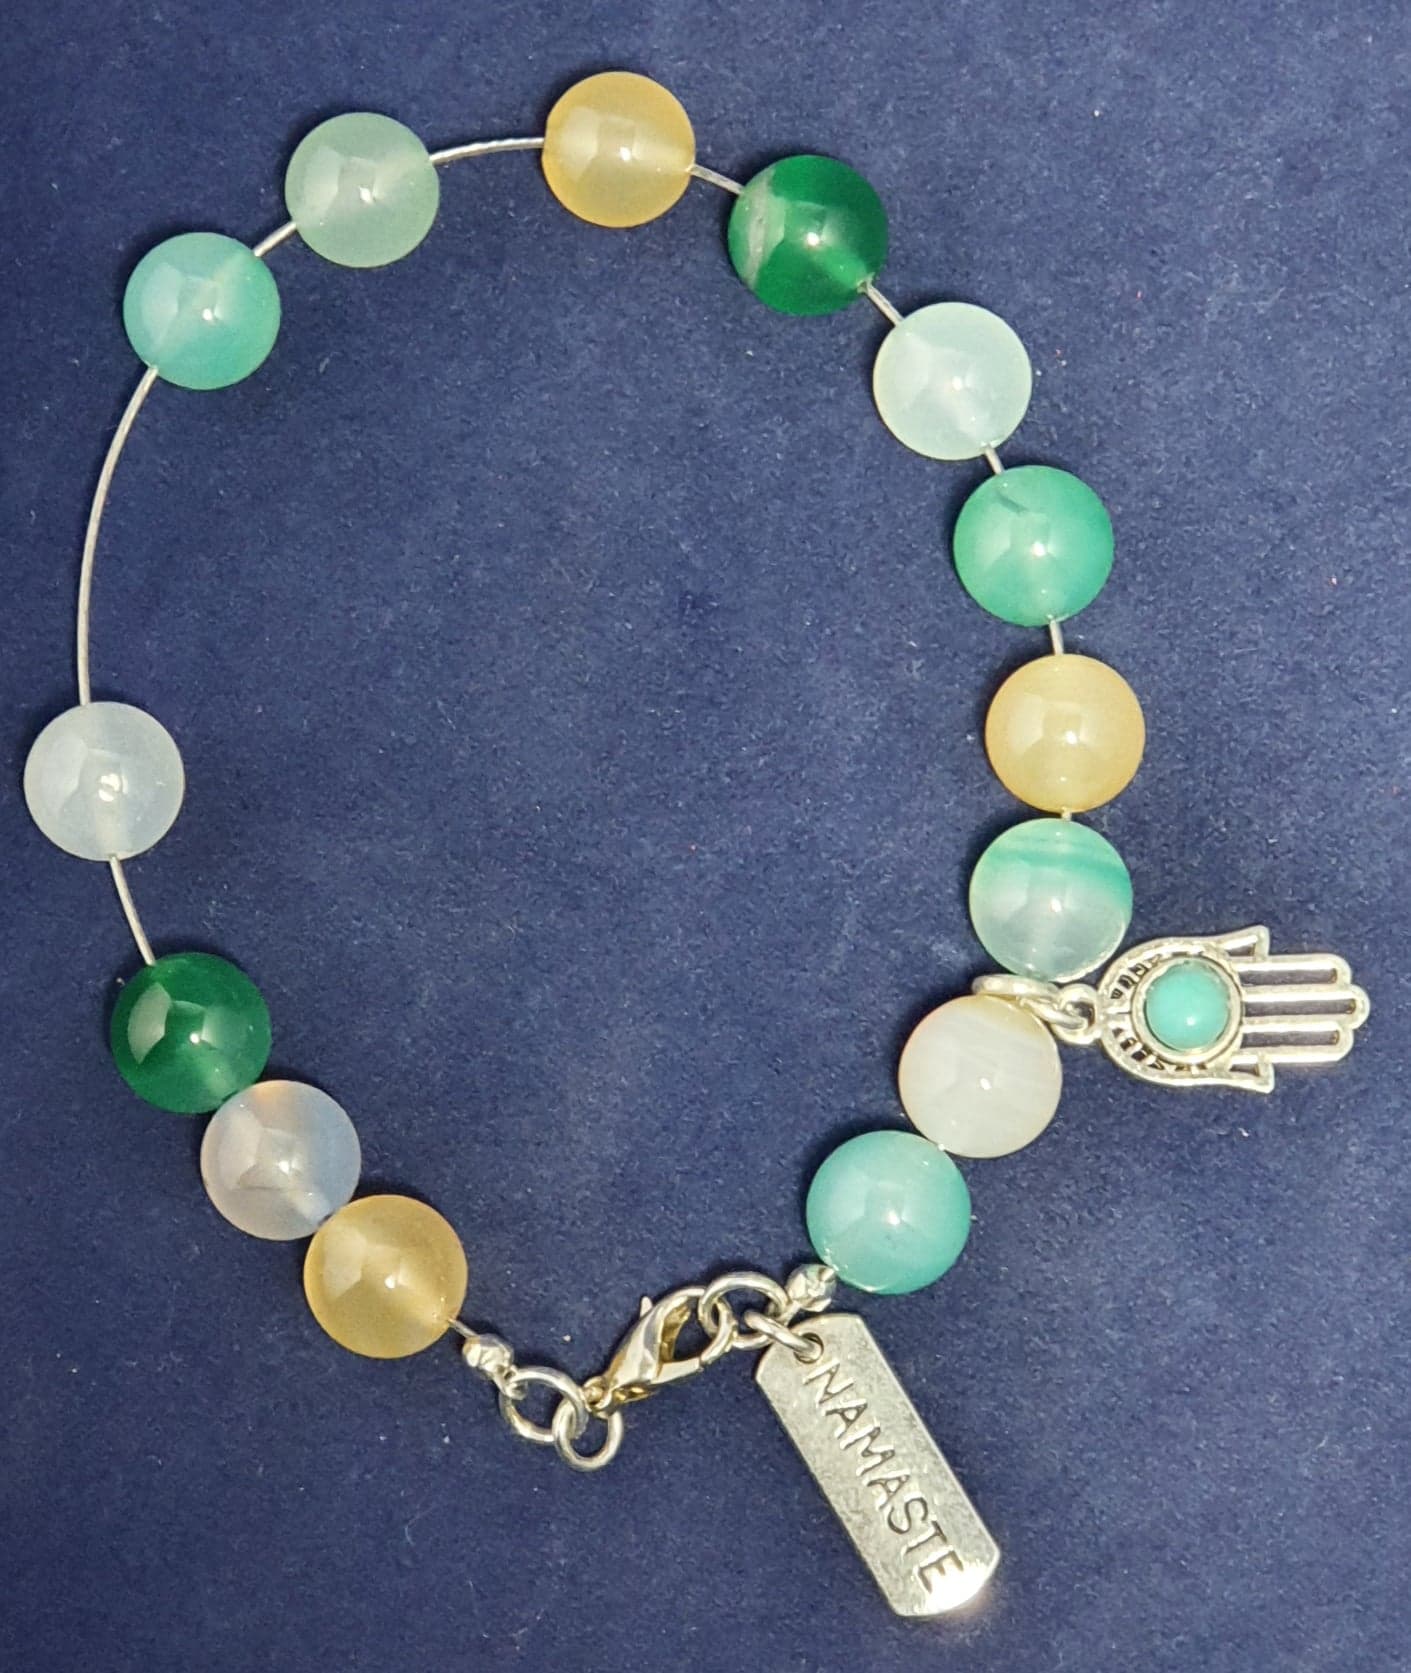 Agate Worry beads / meditation bead bracelet